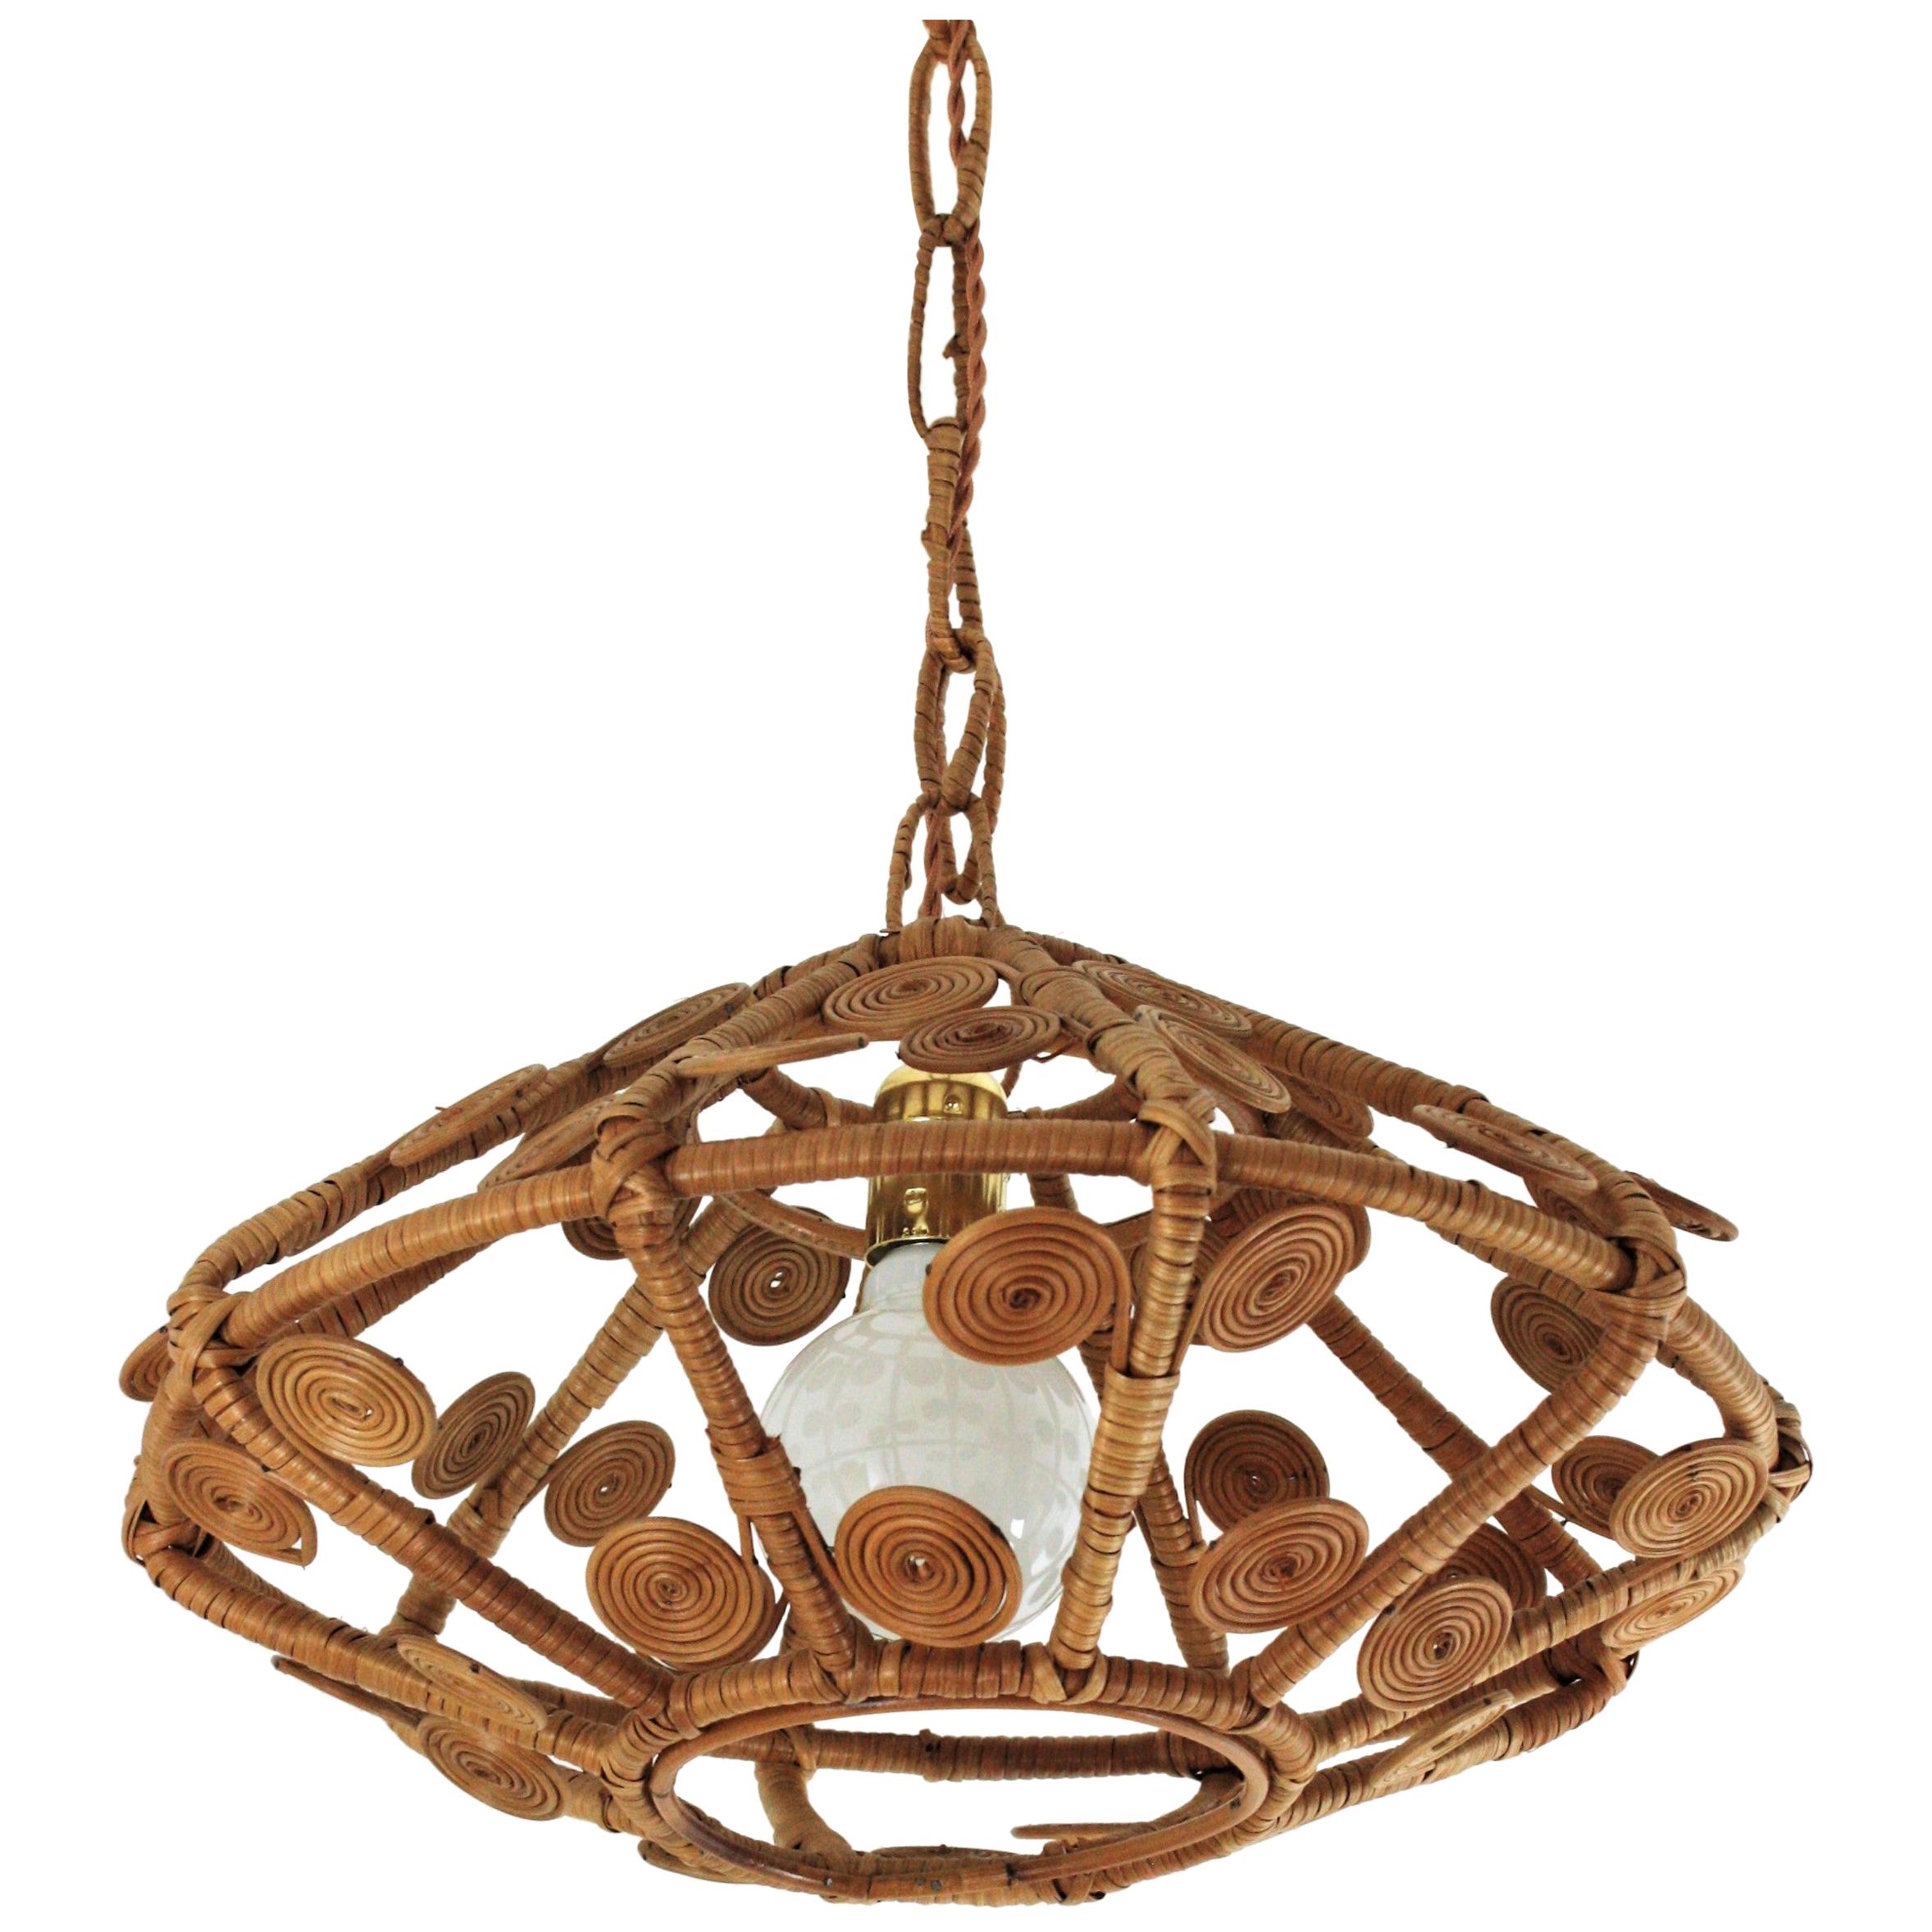 Spanish Modern Rattan Wicker Pendant Hanging Lamp with Filigree Details, 1960s